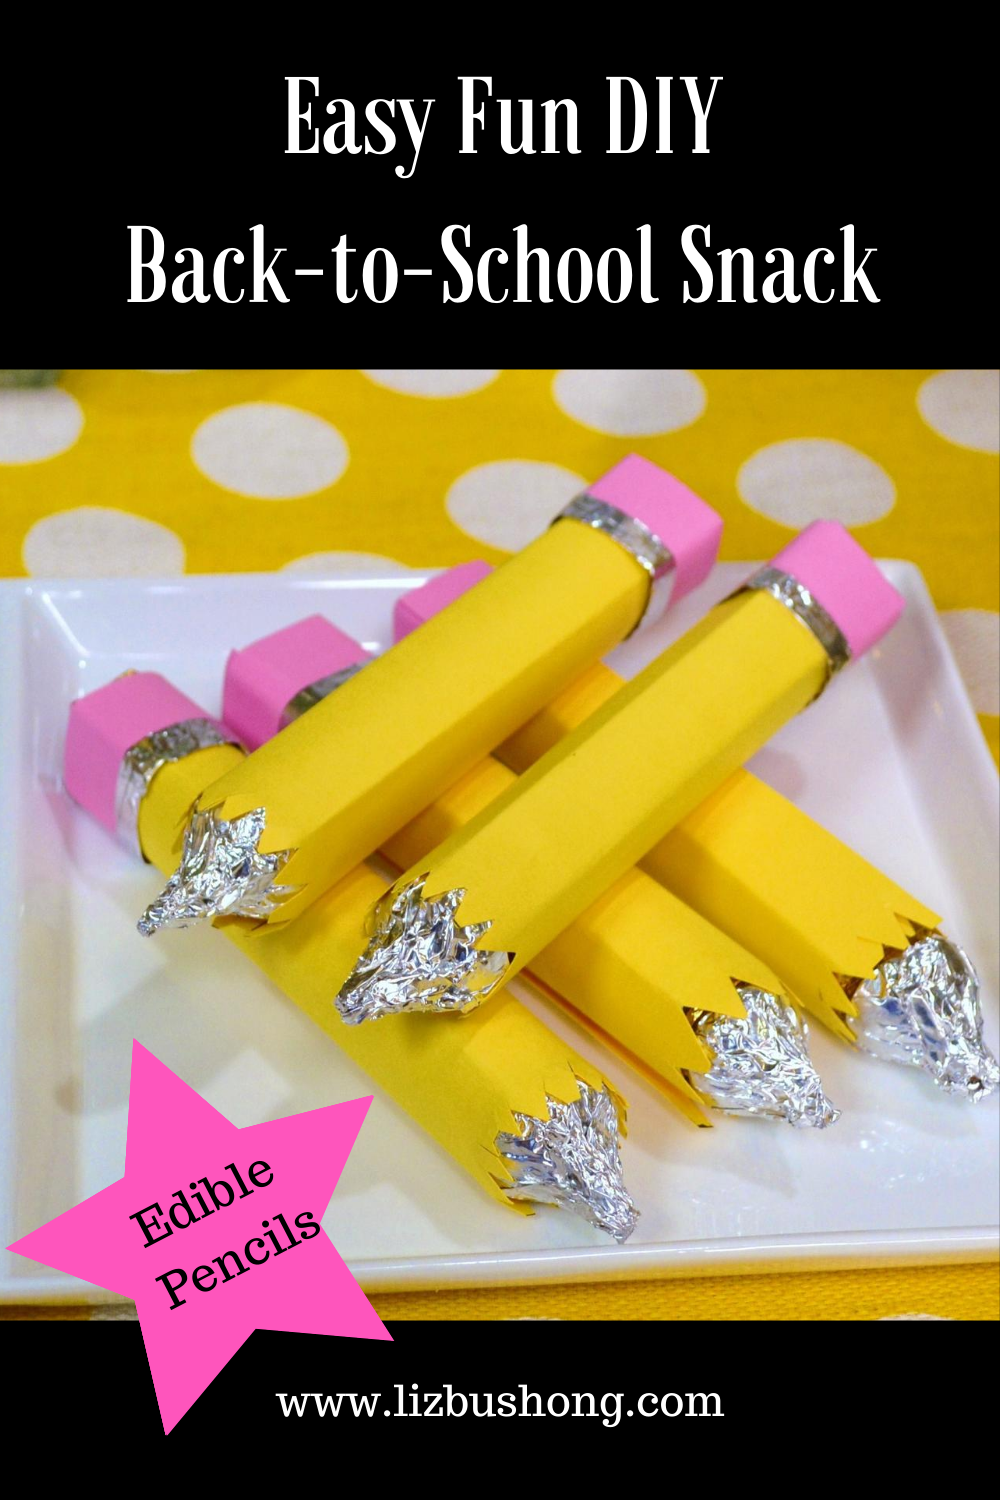 Back to school lunch ideas edible cheese pencils lizbushong.com